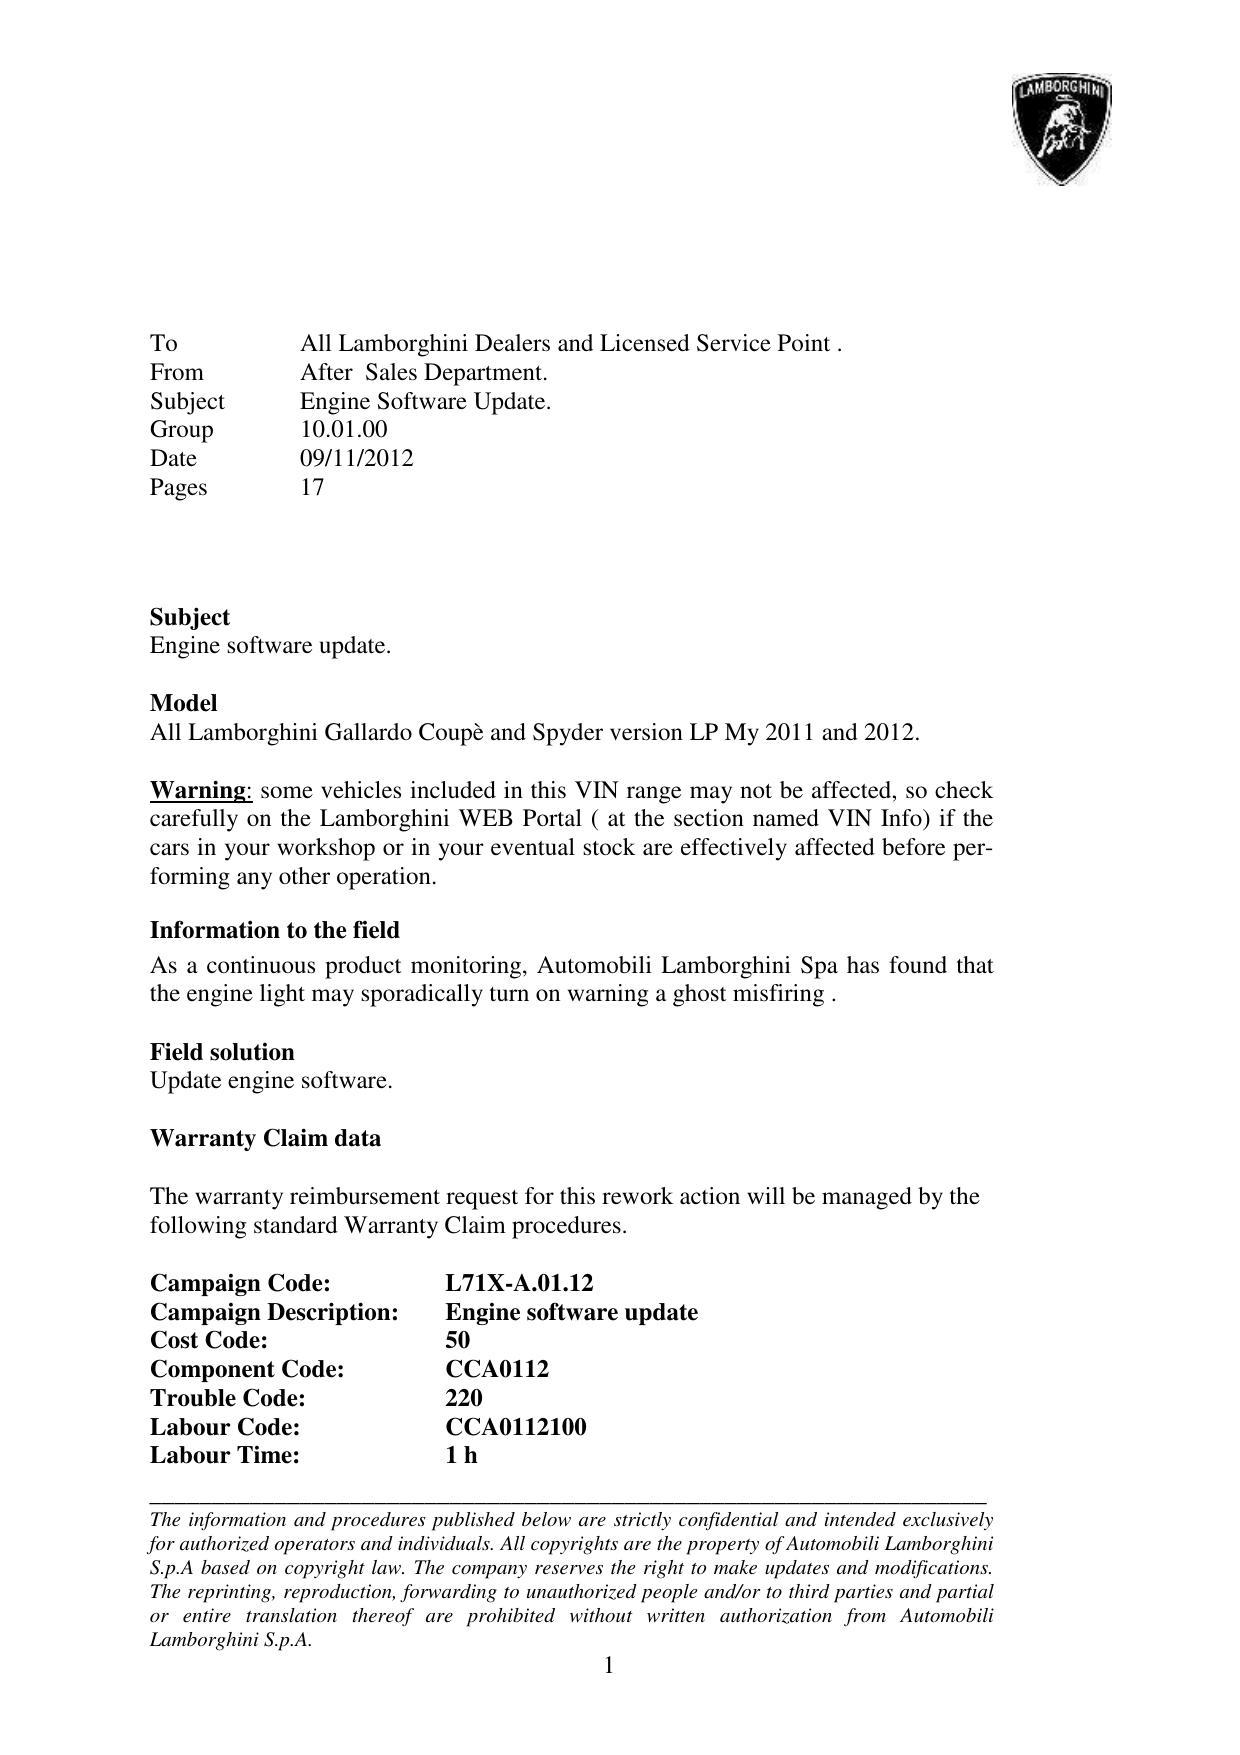 lamborghini-gallardo-coupe-and-spyder-engine-software-update-manual-2011-2012.pdf